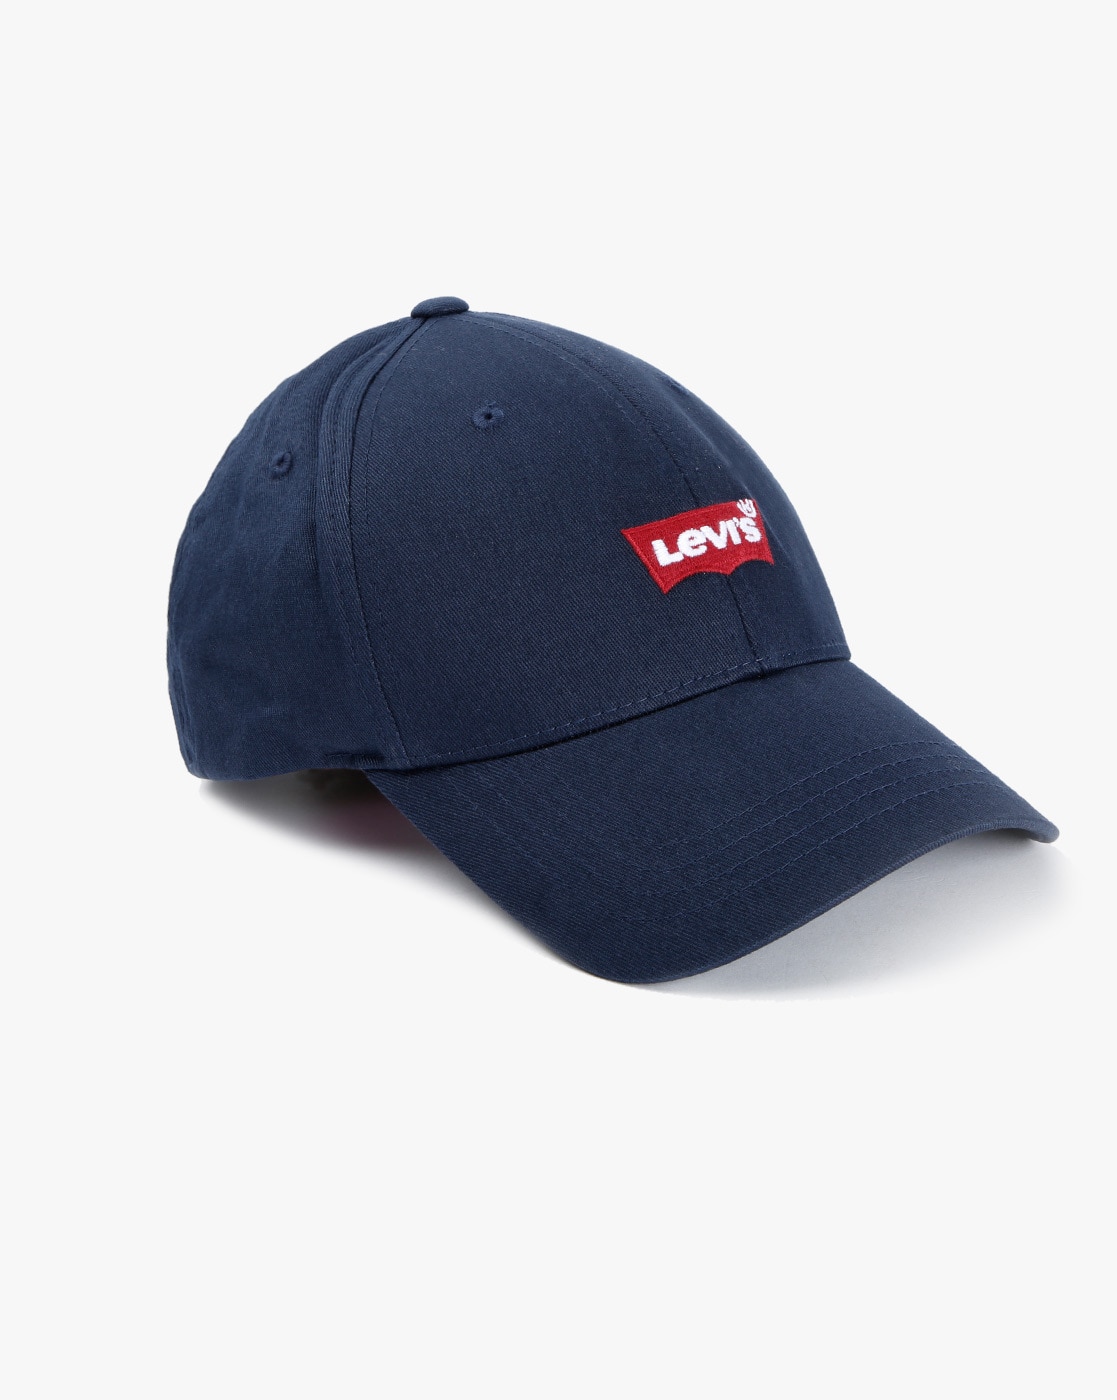 Buy Navy Blue Caps & Hats for Men by LEVIS Online 